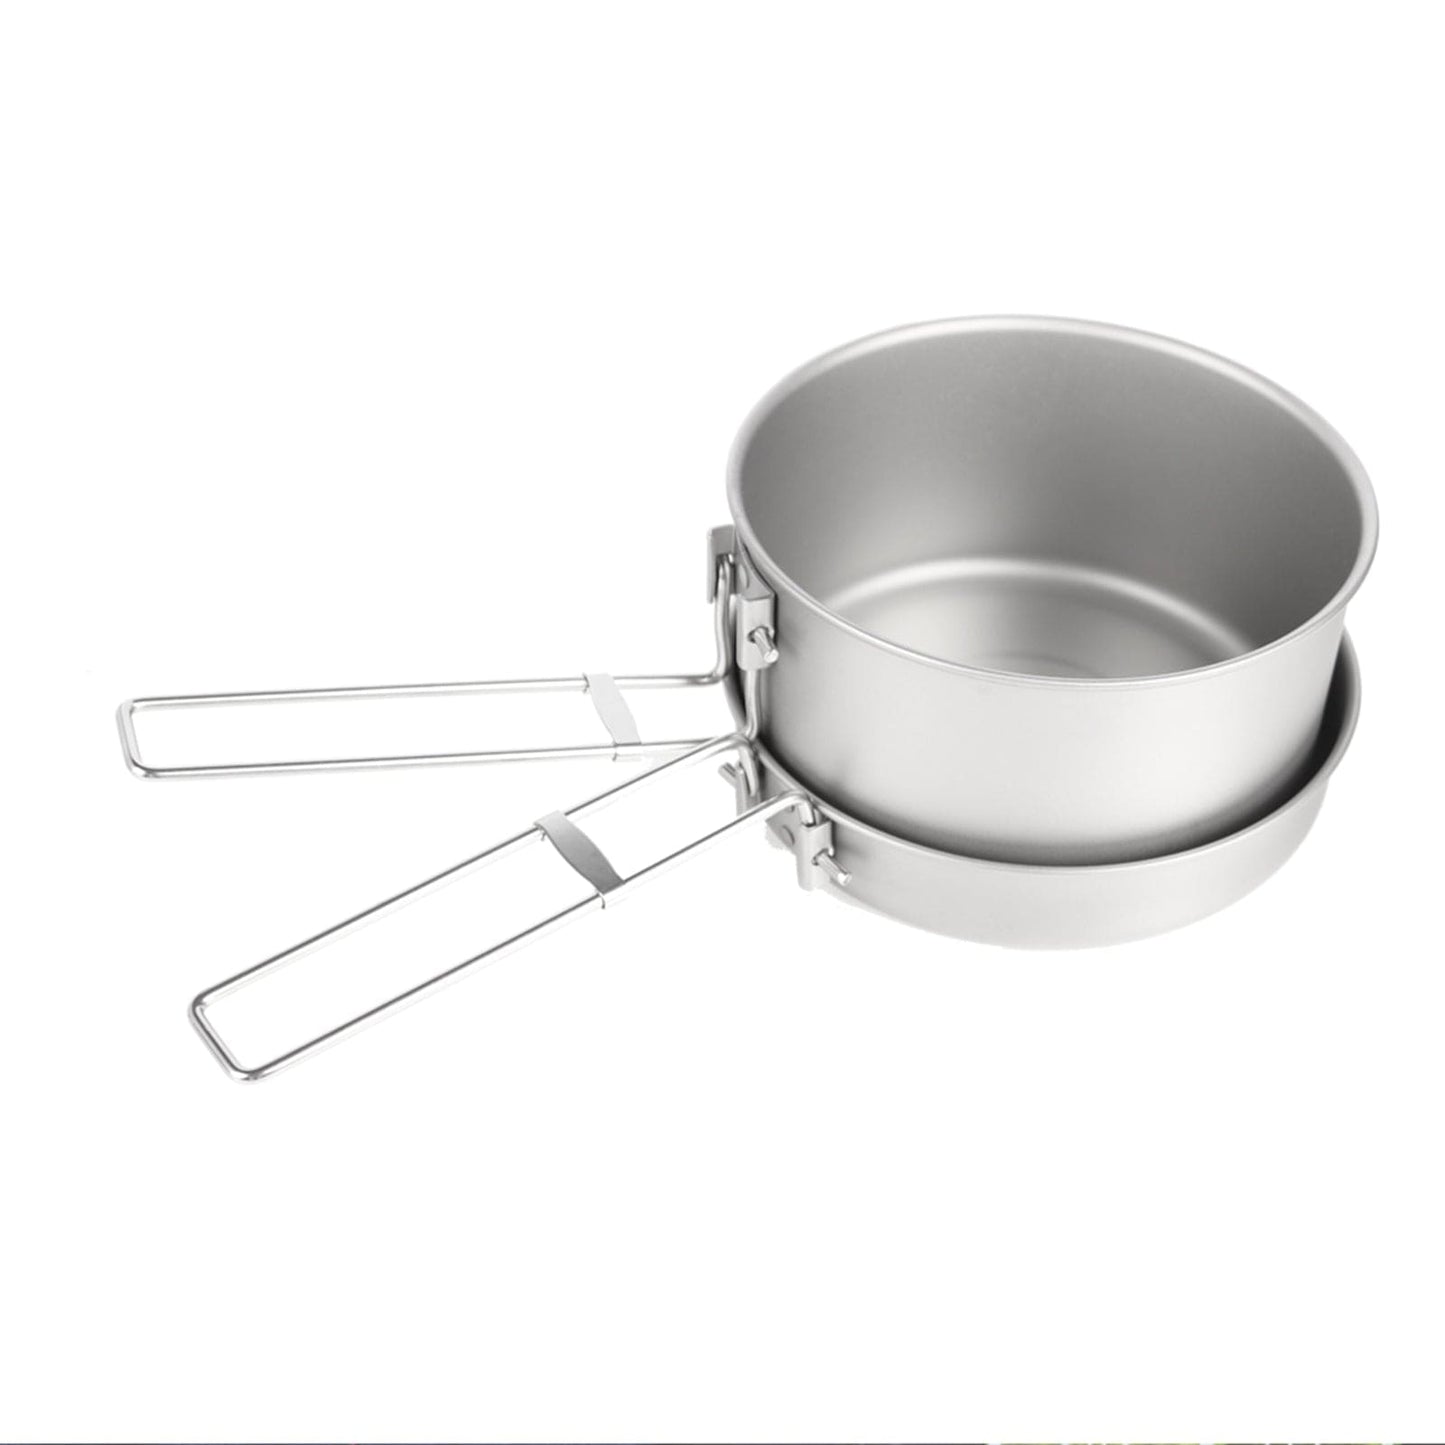 
                  
                    Ultralight Titanium Pot and Pan Camping Cookware Set - 1600ml/54.1 fl oz - SilverAnt Outdoors
                  
                